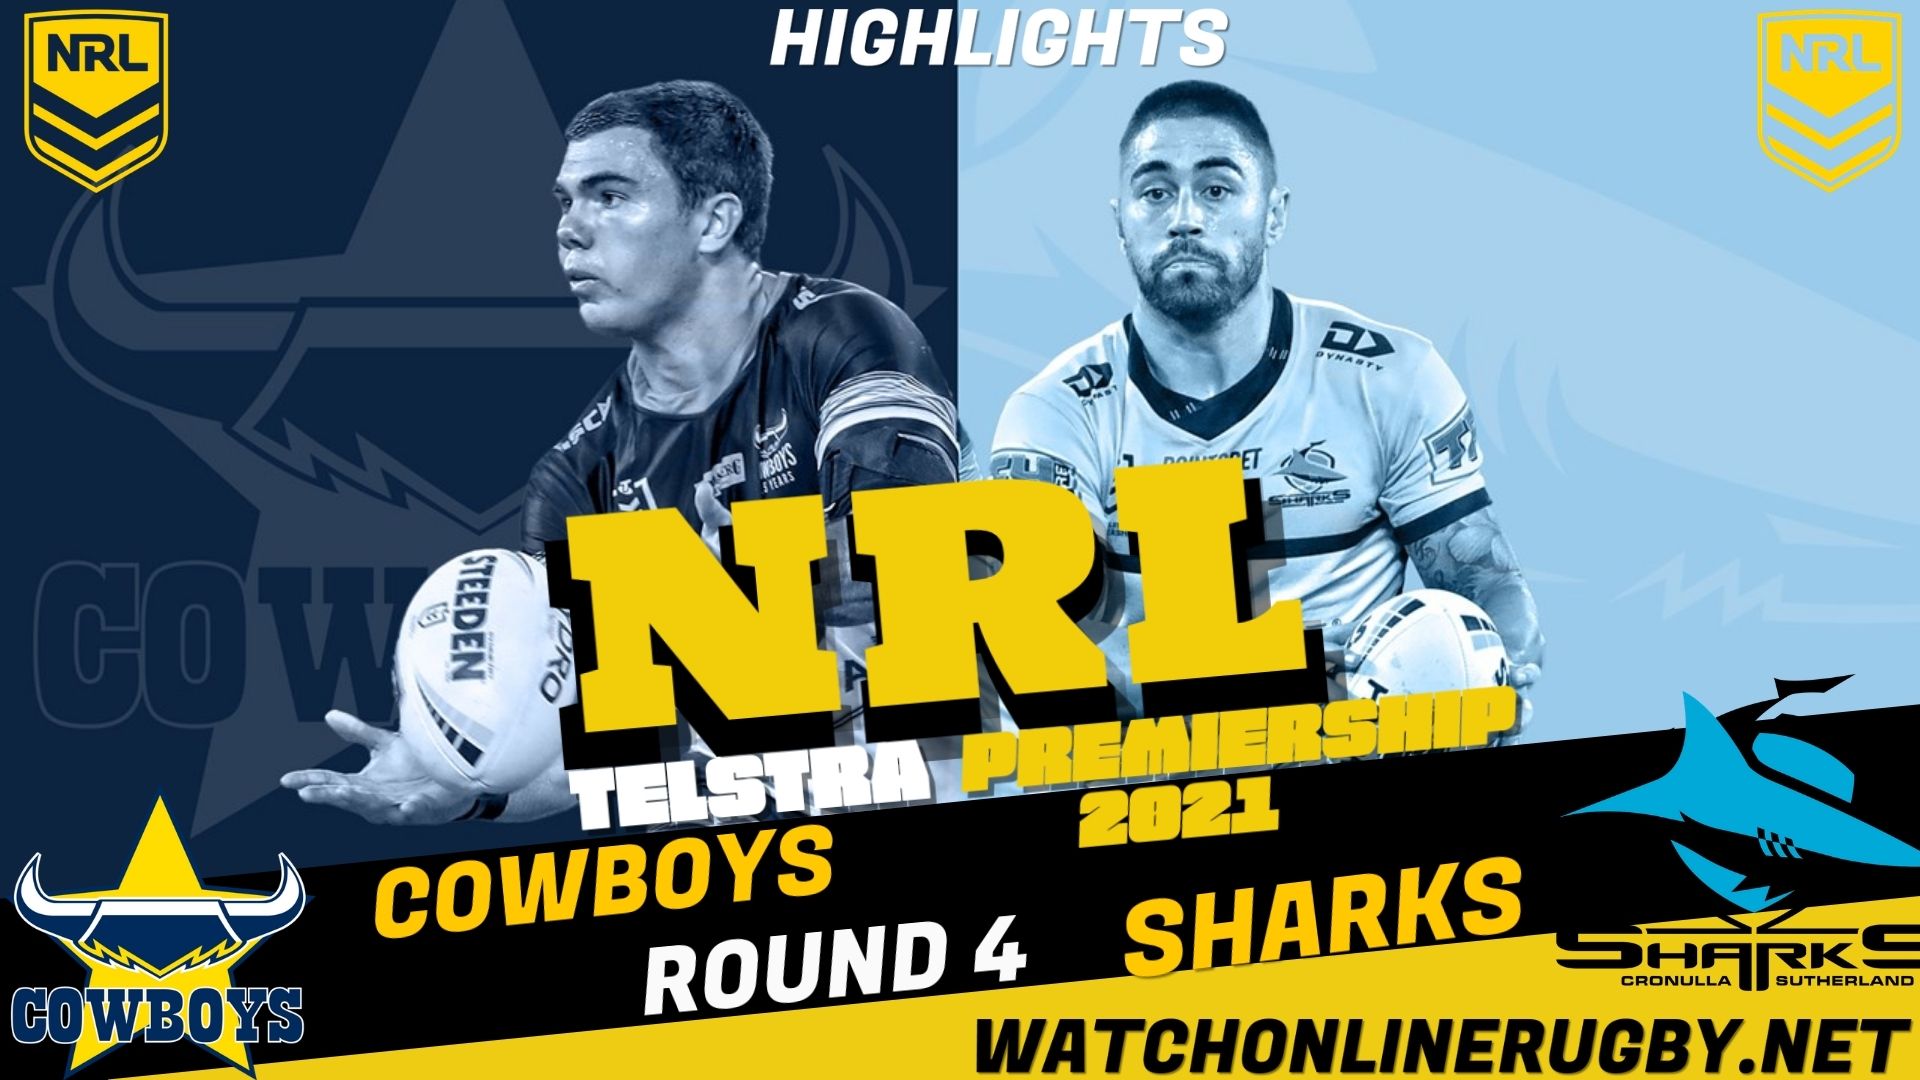 Sharks Vs Cowboys Highlights RD 4 NRL Rugby